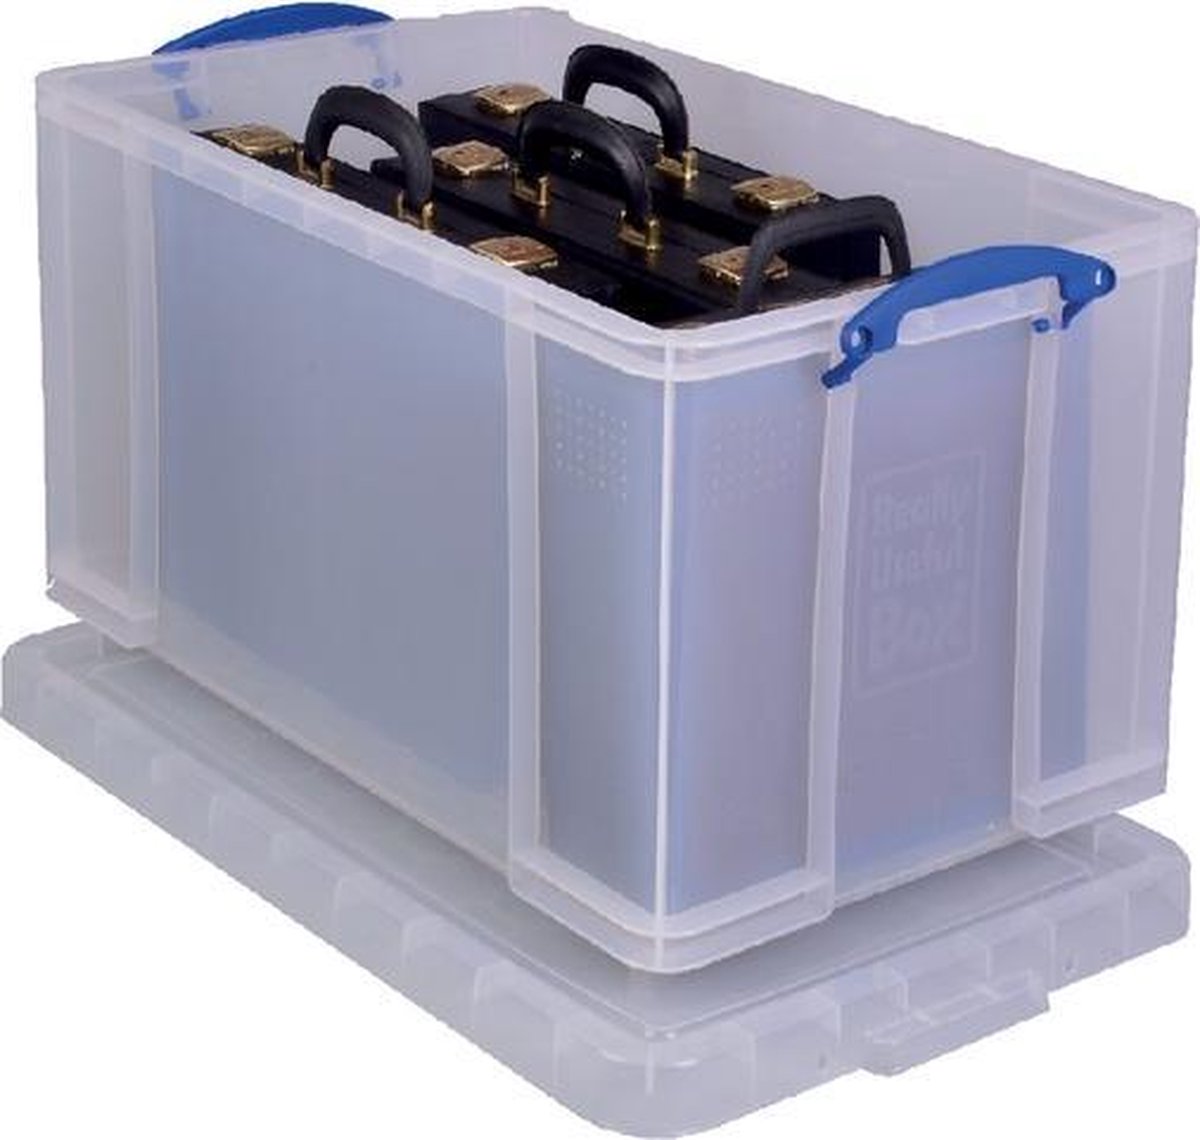 2 x Opbergbox Really Useful Box * 84 liter * 71 x 44 x 38 cm